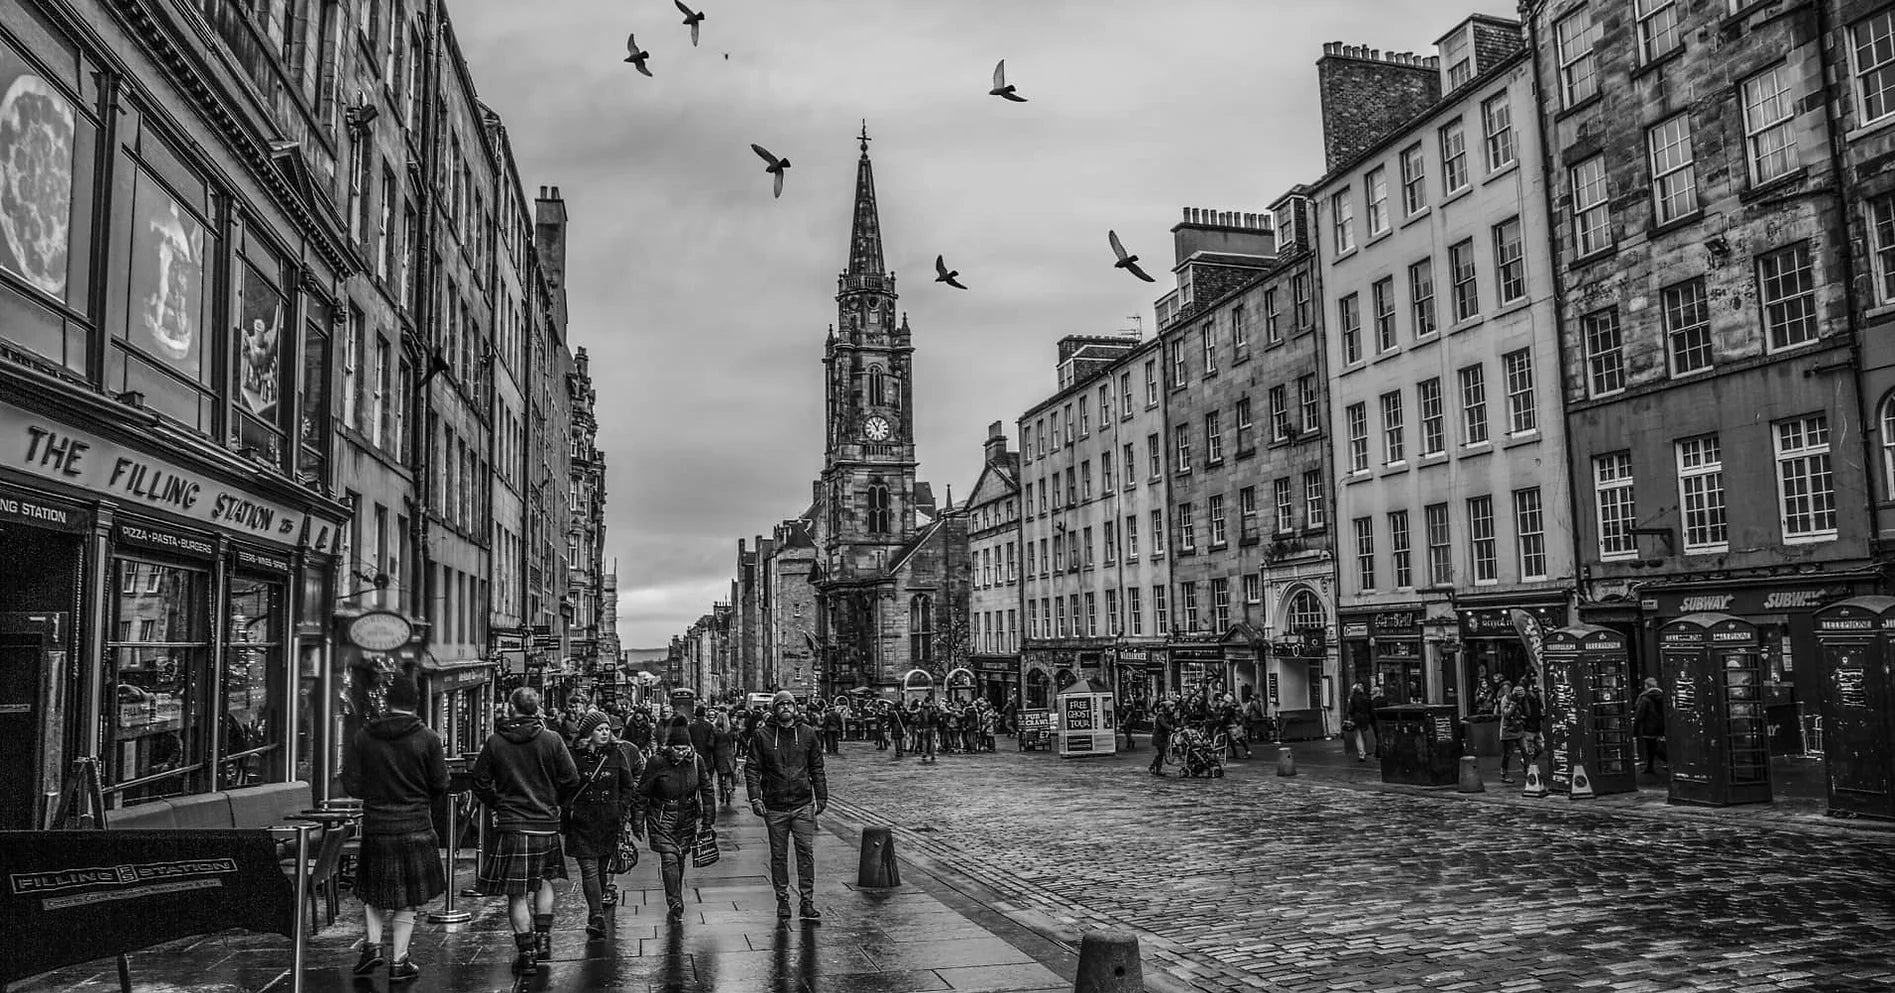 Edinburgh - The Murder by The Royal Mile